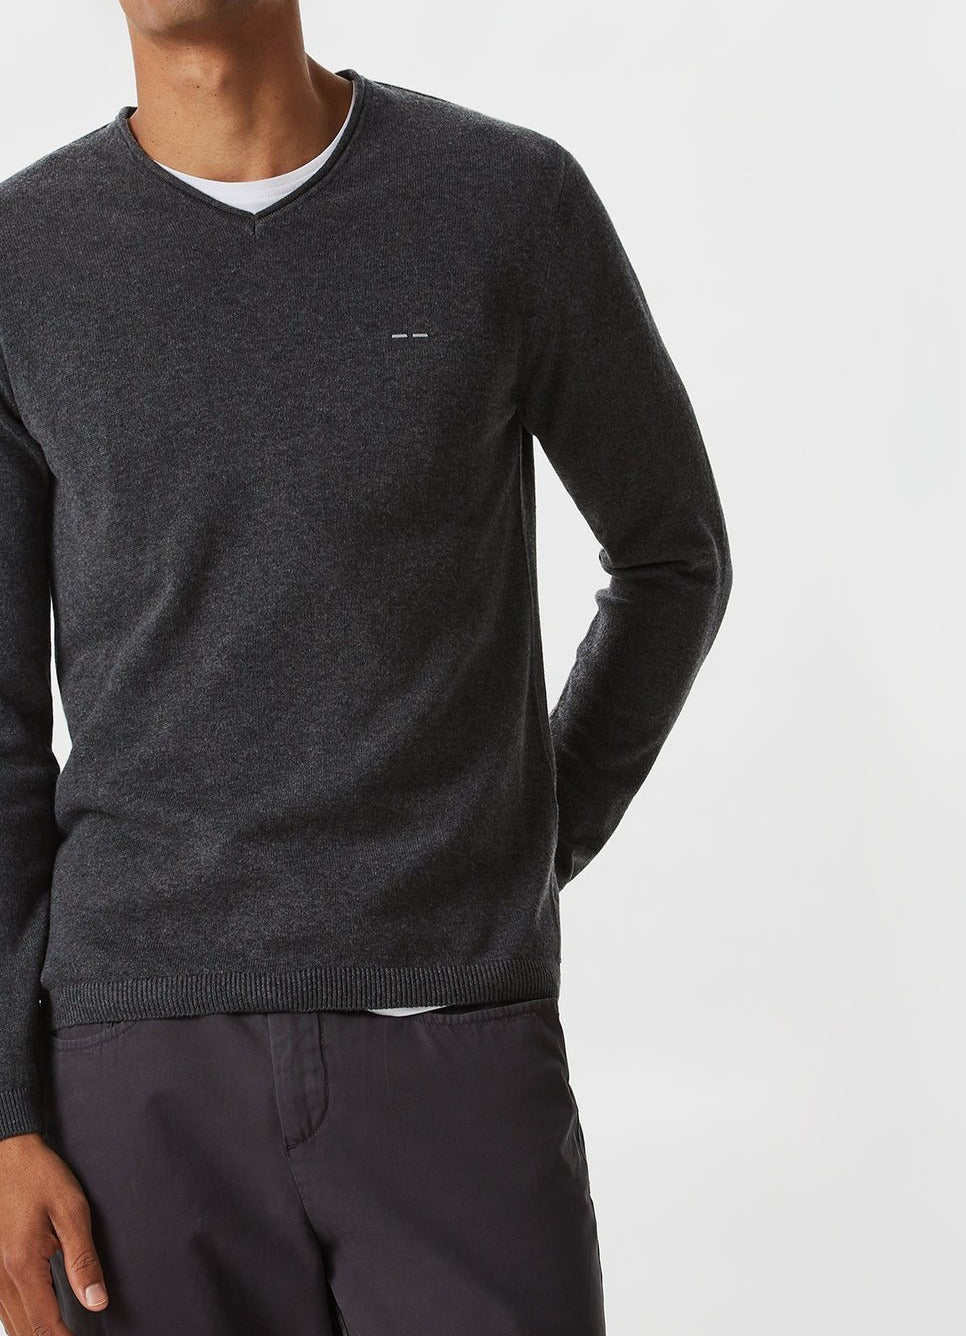 Men Jersey | Charcoal Grey Sweater by Spanish designer Adolfo Dominguez